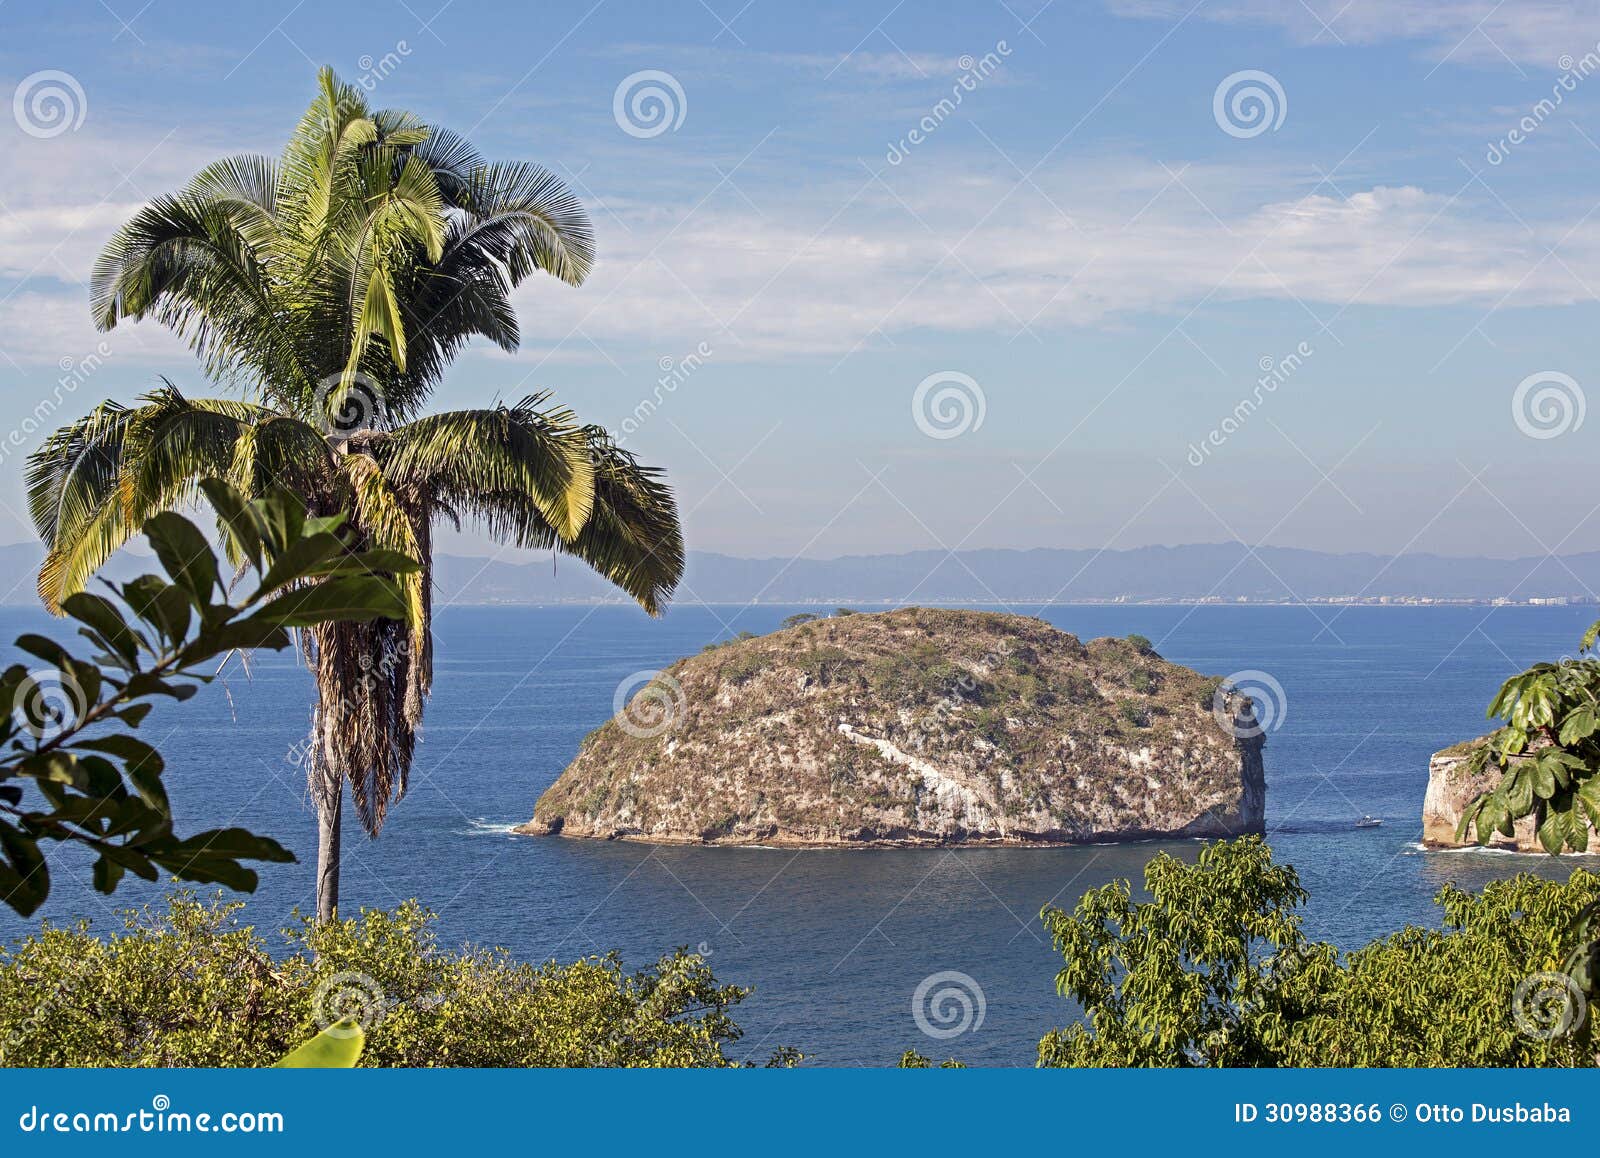 coastal scenic with islet